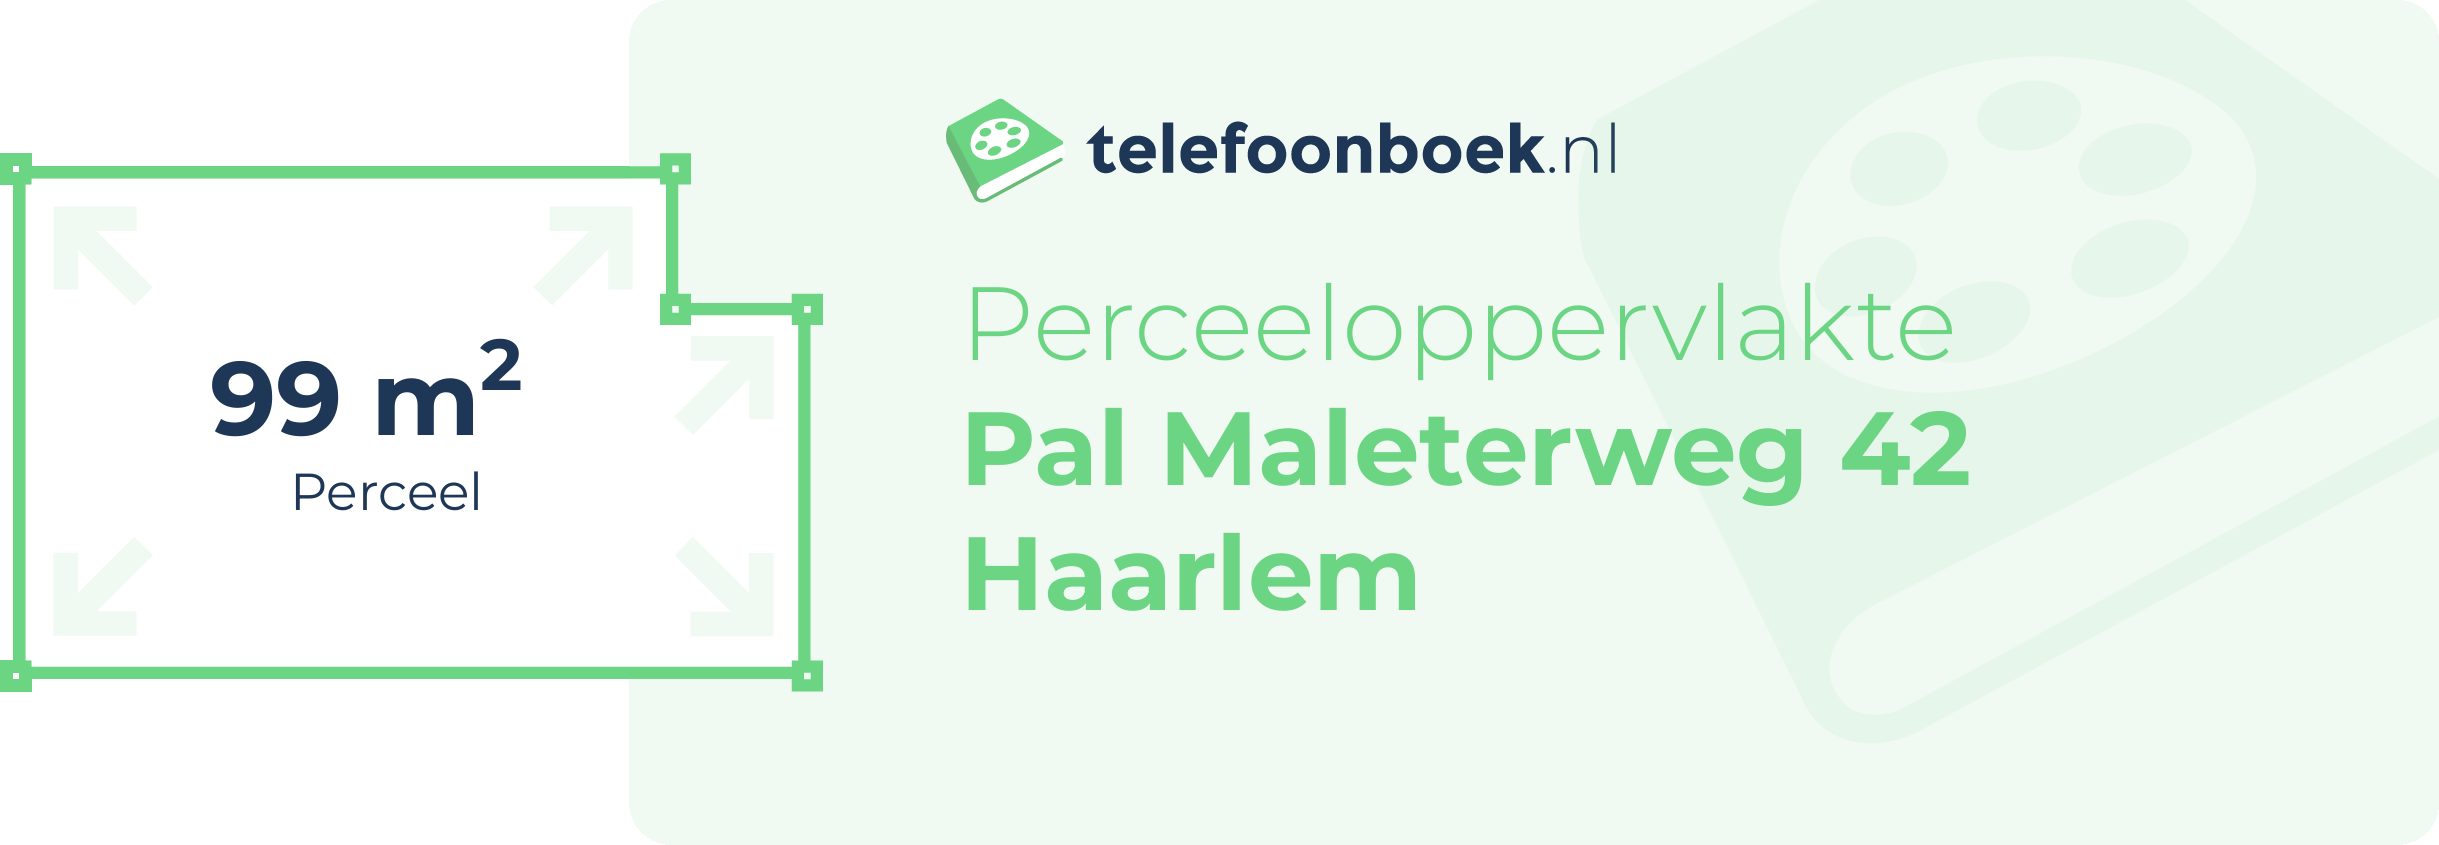 Perceeloppervlakte Pal Maleterweg 42 Haarlem